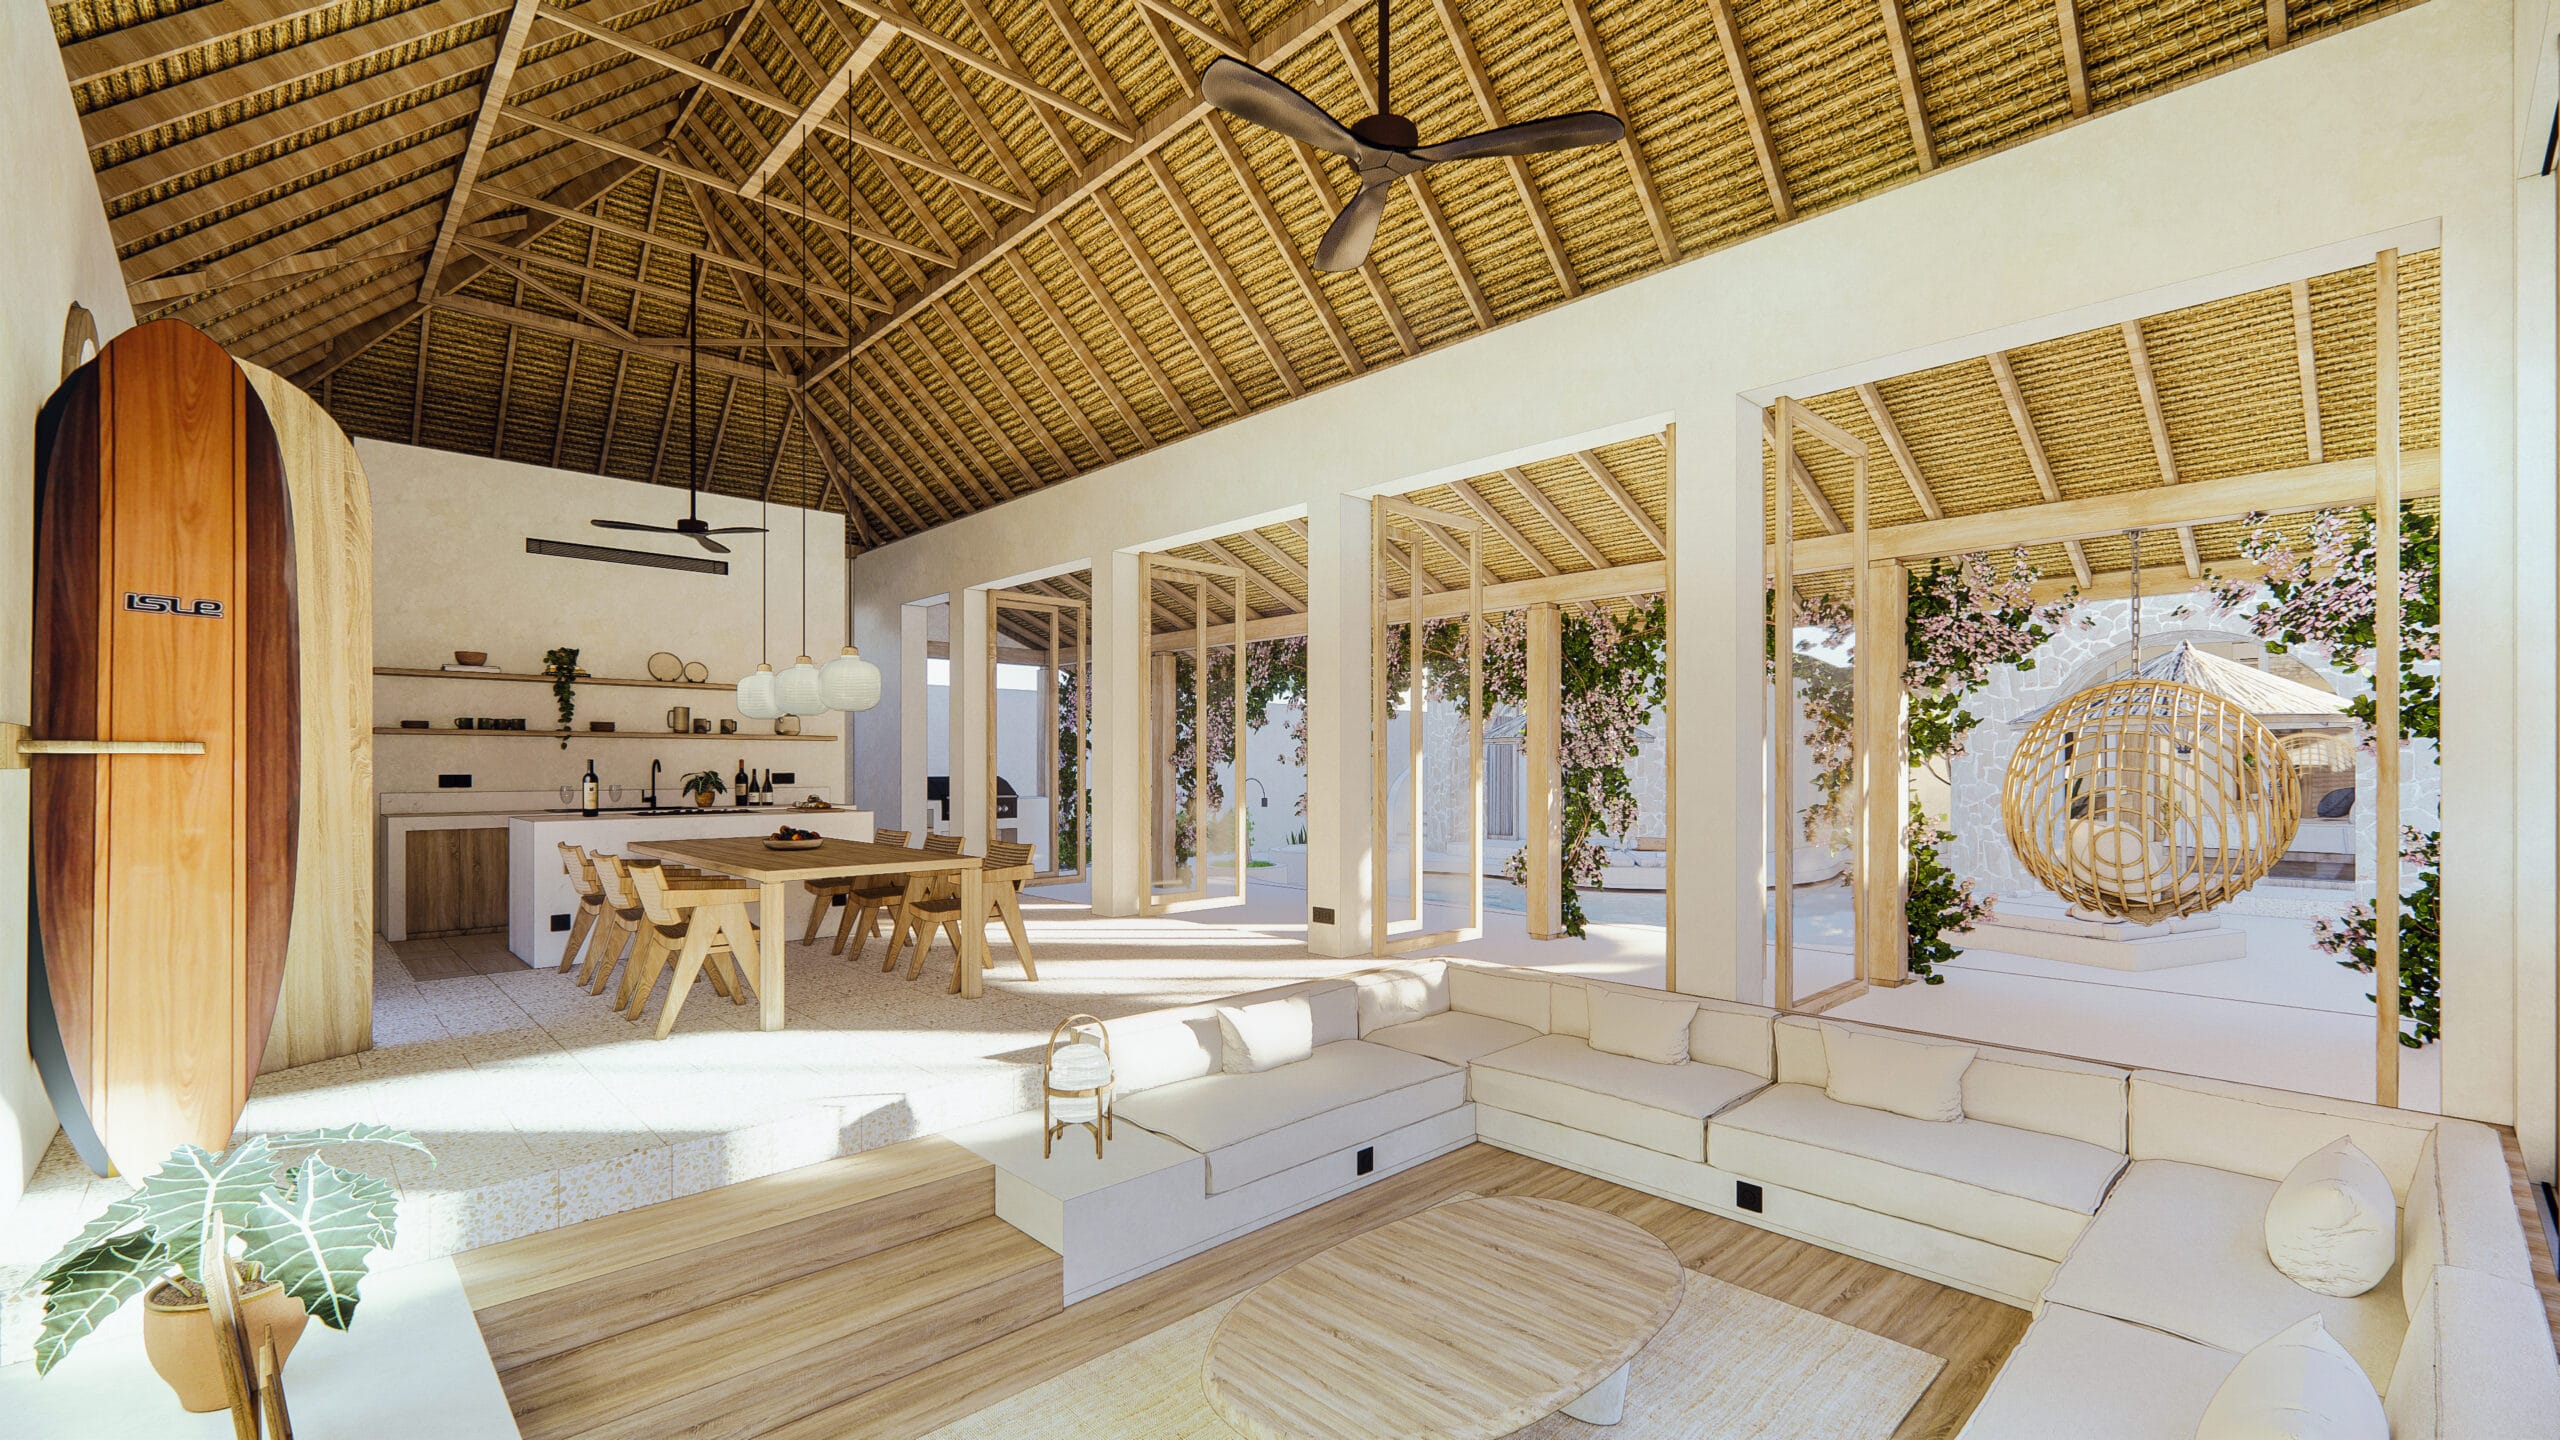 Design Assembly - Michael Utomo Villa - Bali Architect - Interior Design - Bali Villa - Kitchen - Dining Room - Living Room